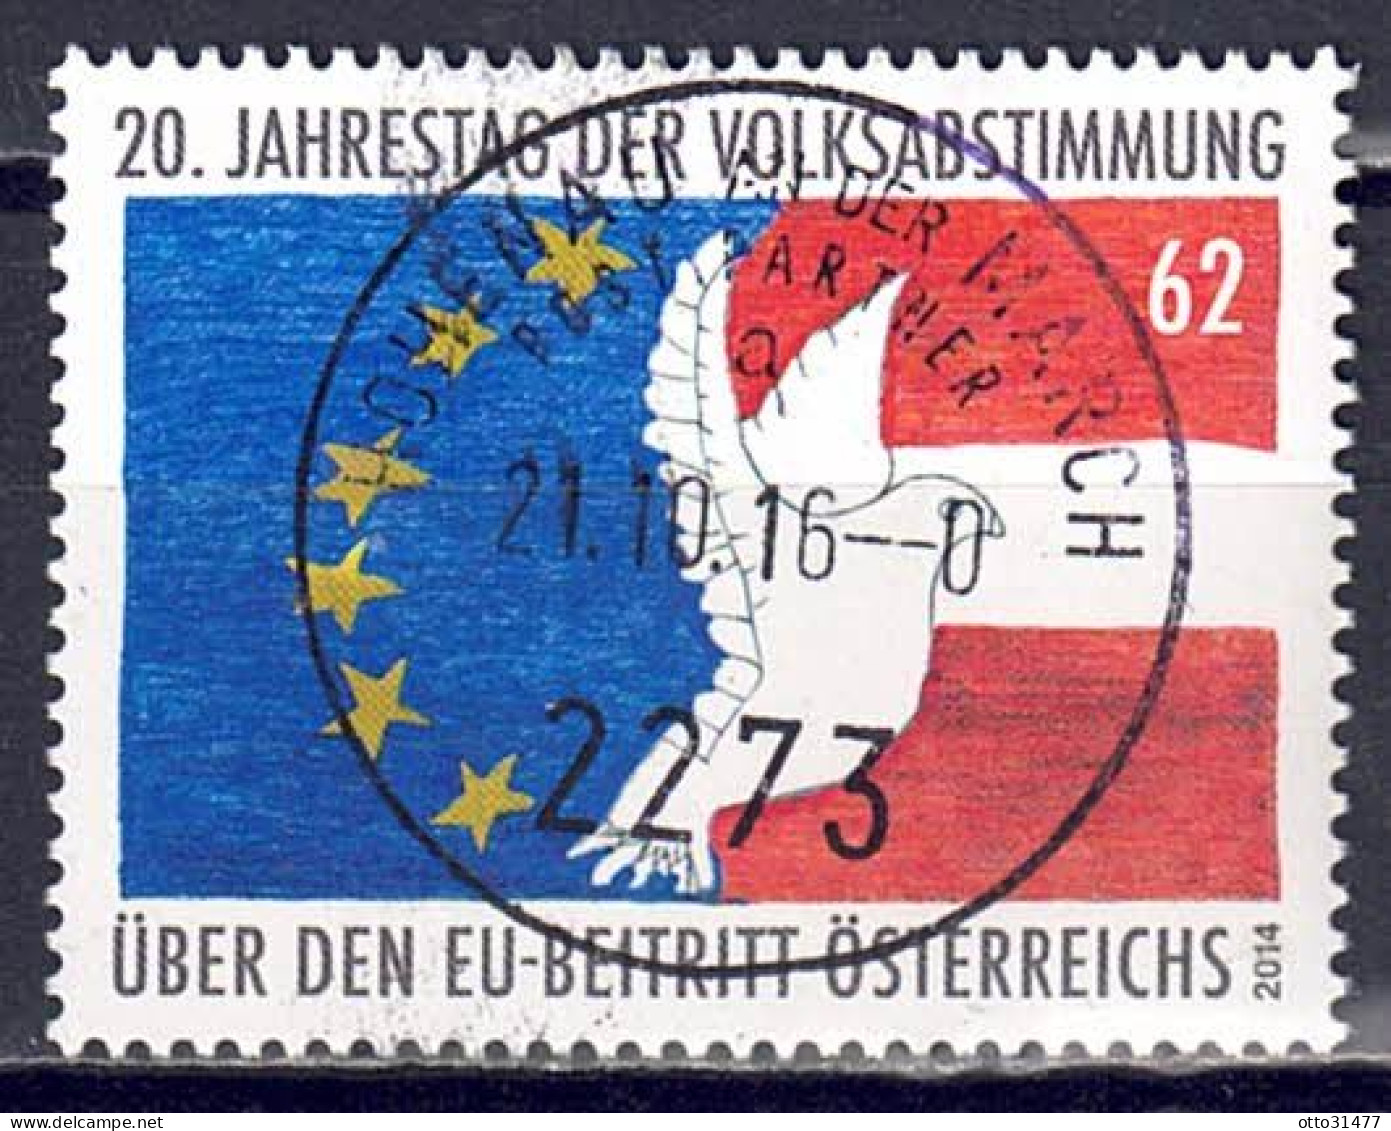 Österreich 2014 - EU-Beitritt, MiNr. 3145, Gestempelt / Used - Usados